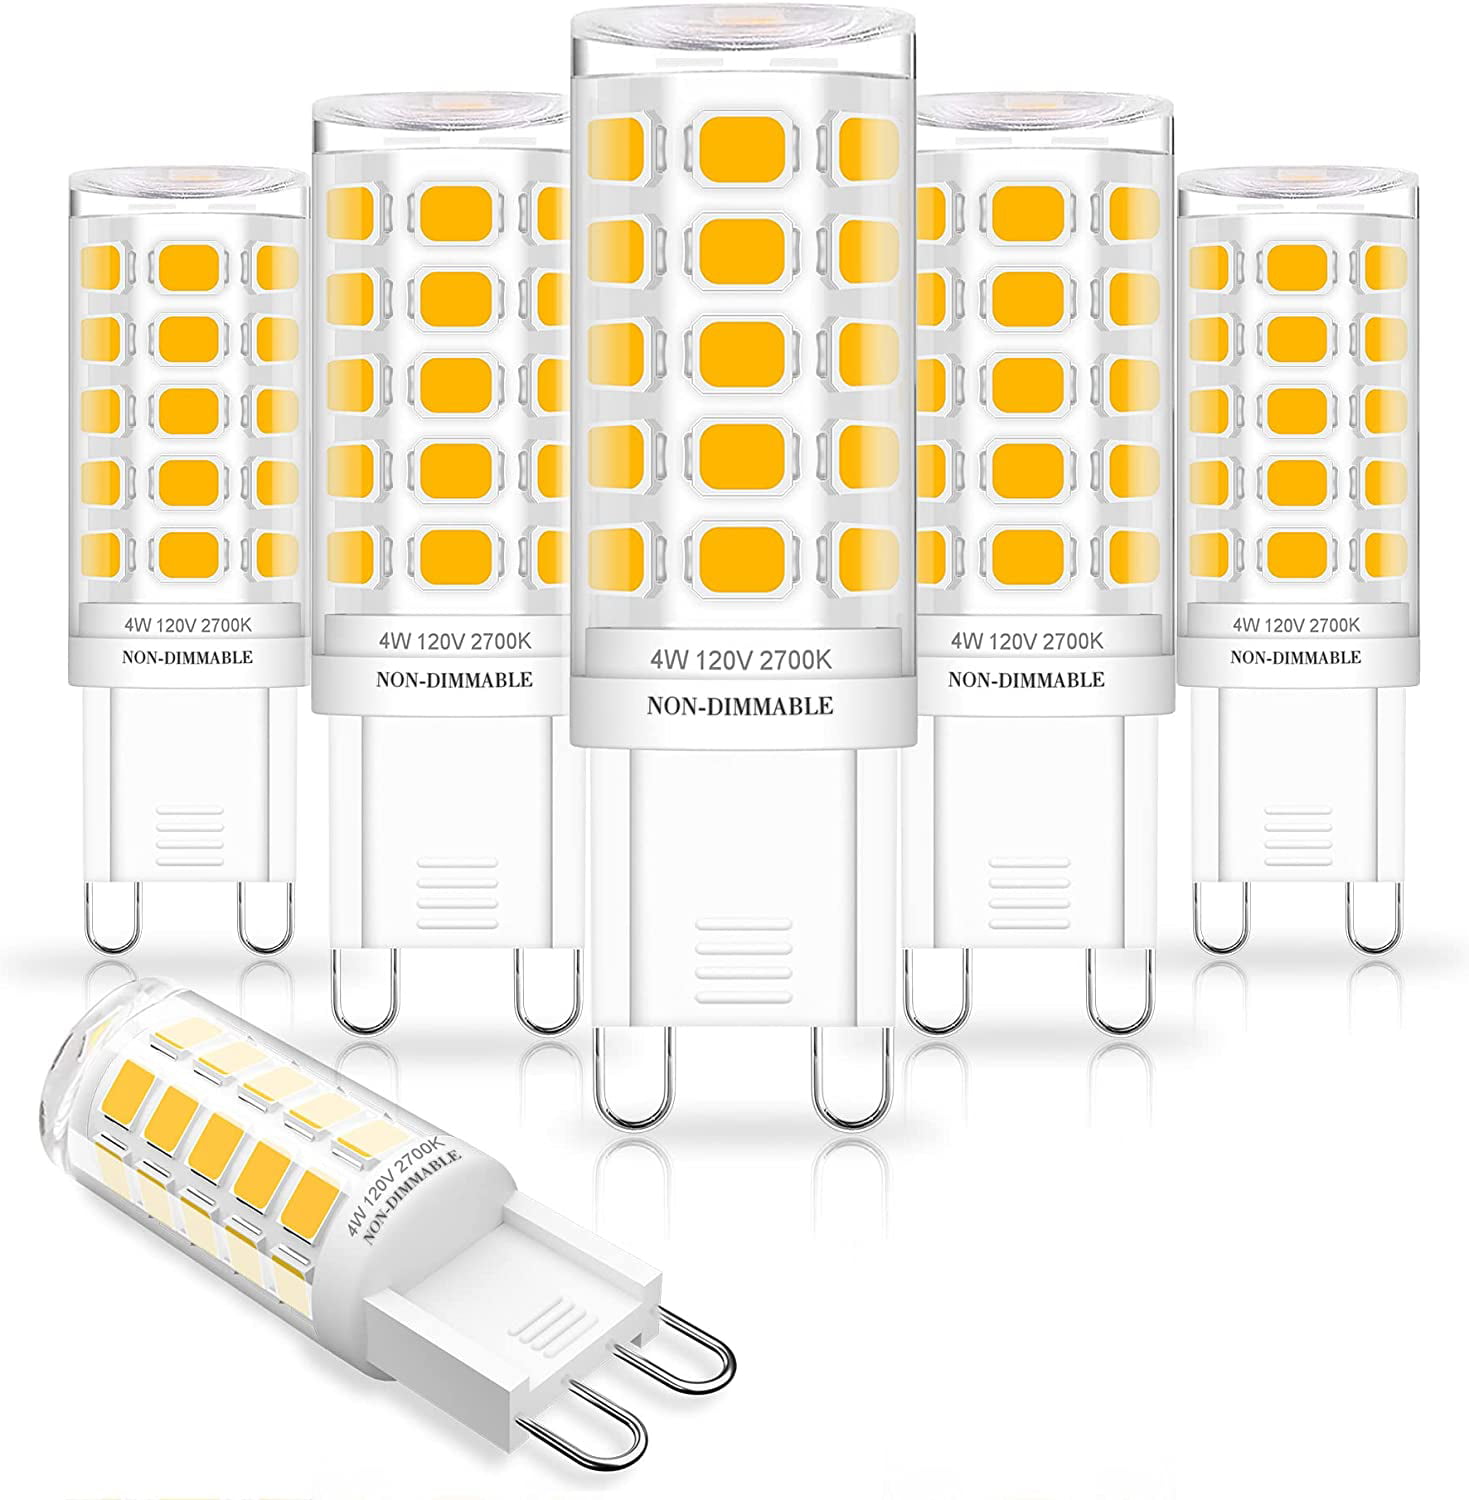 G9 Led Bulb 4W(40W Equivalent), Warm White G9 Bipin Base, 120V 400 Lumen, 360°Beam Angle, G9 LED Light Bulbs for Chandelier, 6 Pack, Non-Dimmable - Walmart.com